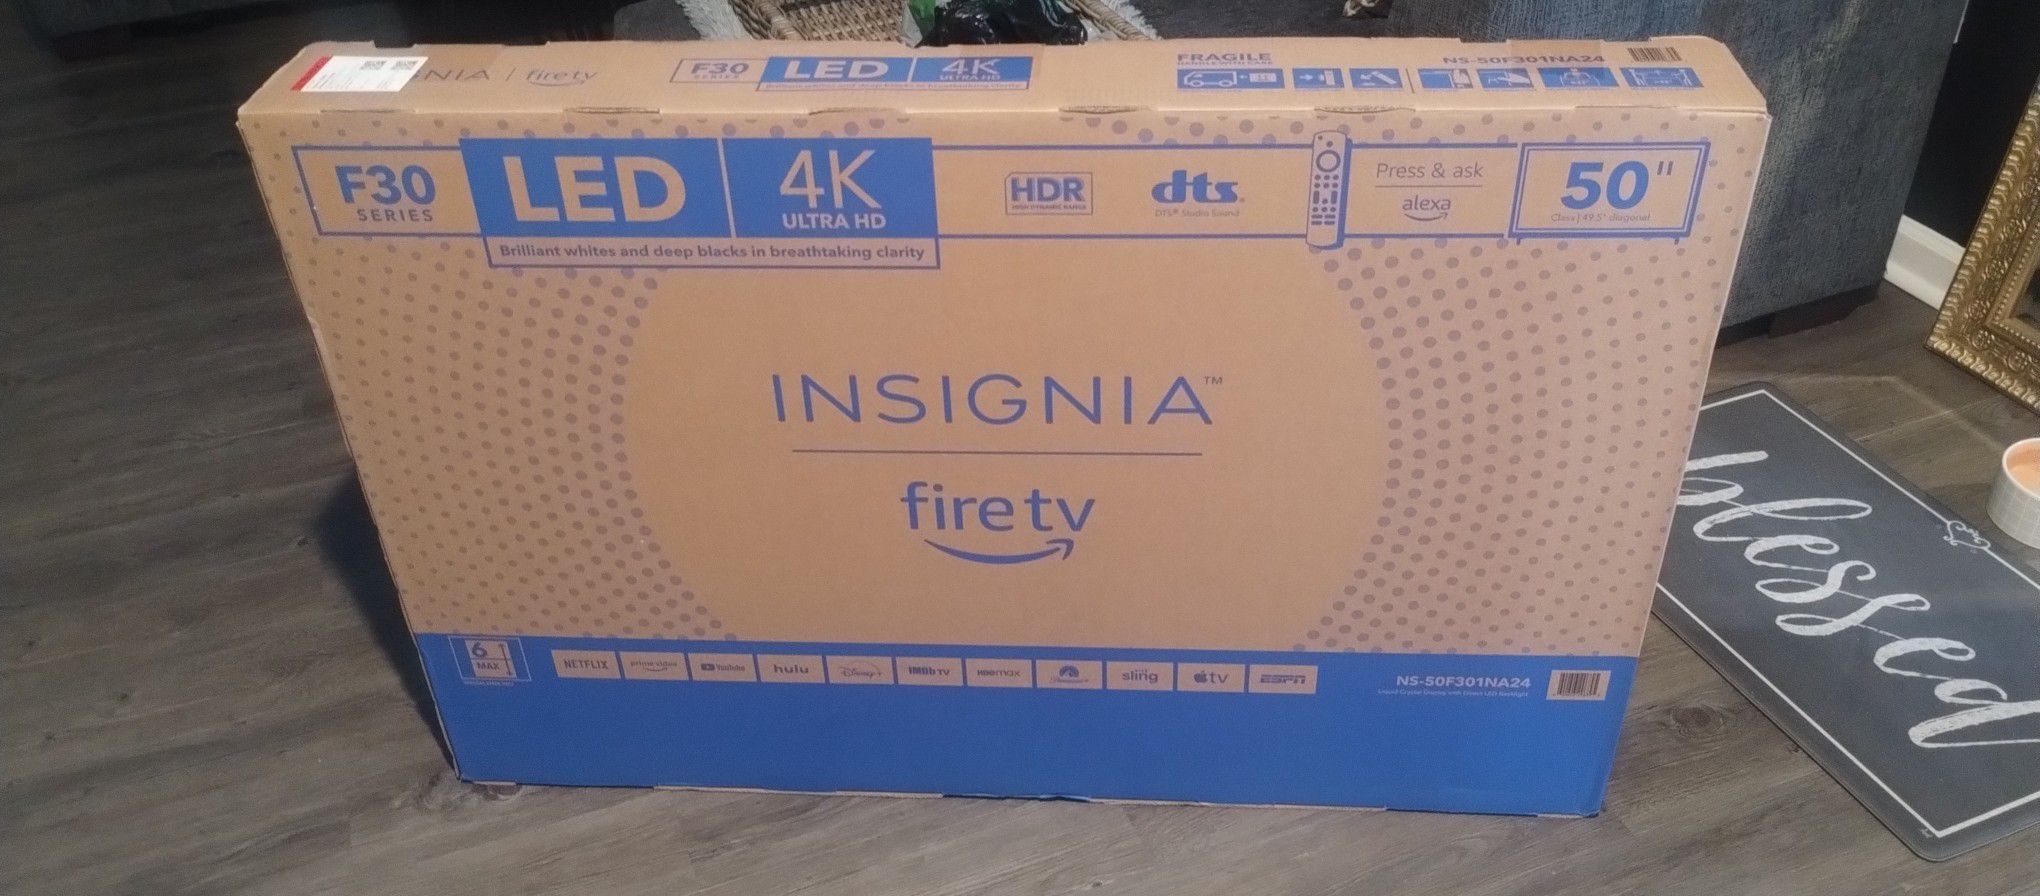 Brand New In Box 50' INCH LED INSIGNIA Fire tv